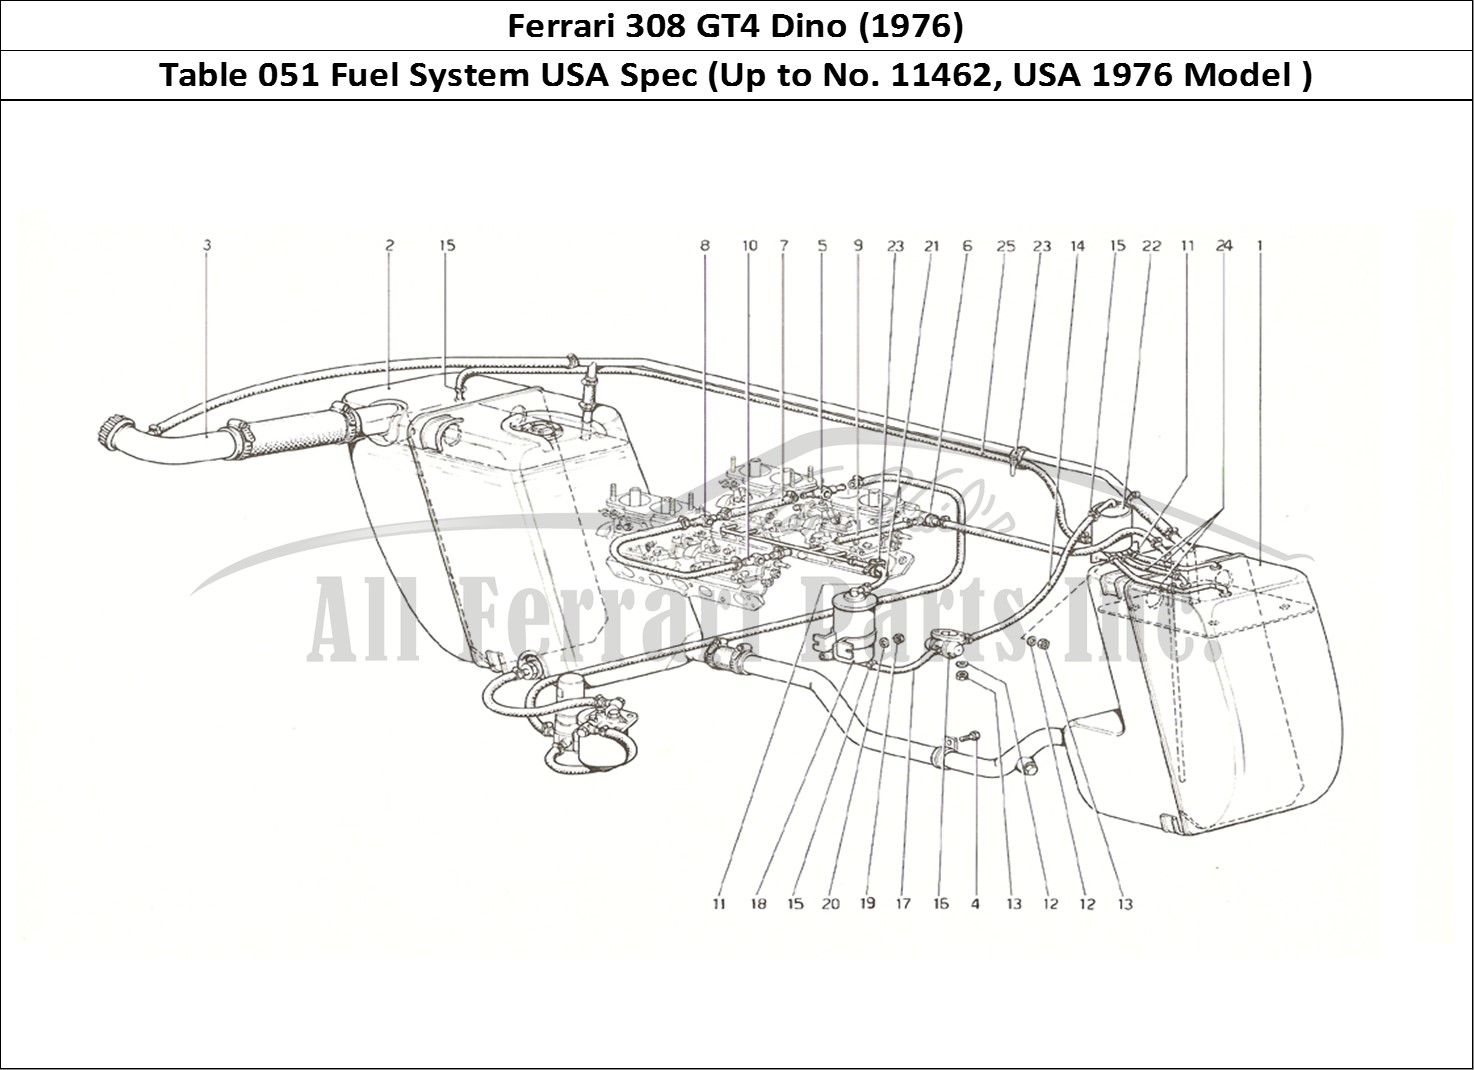 Ferrari Parts Ferrari 308 GT4 Dino (1976) Page 051 Fuel system USA Spec (Up